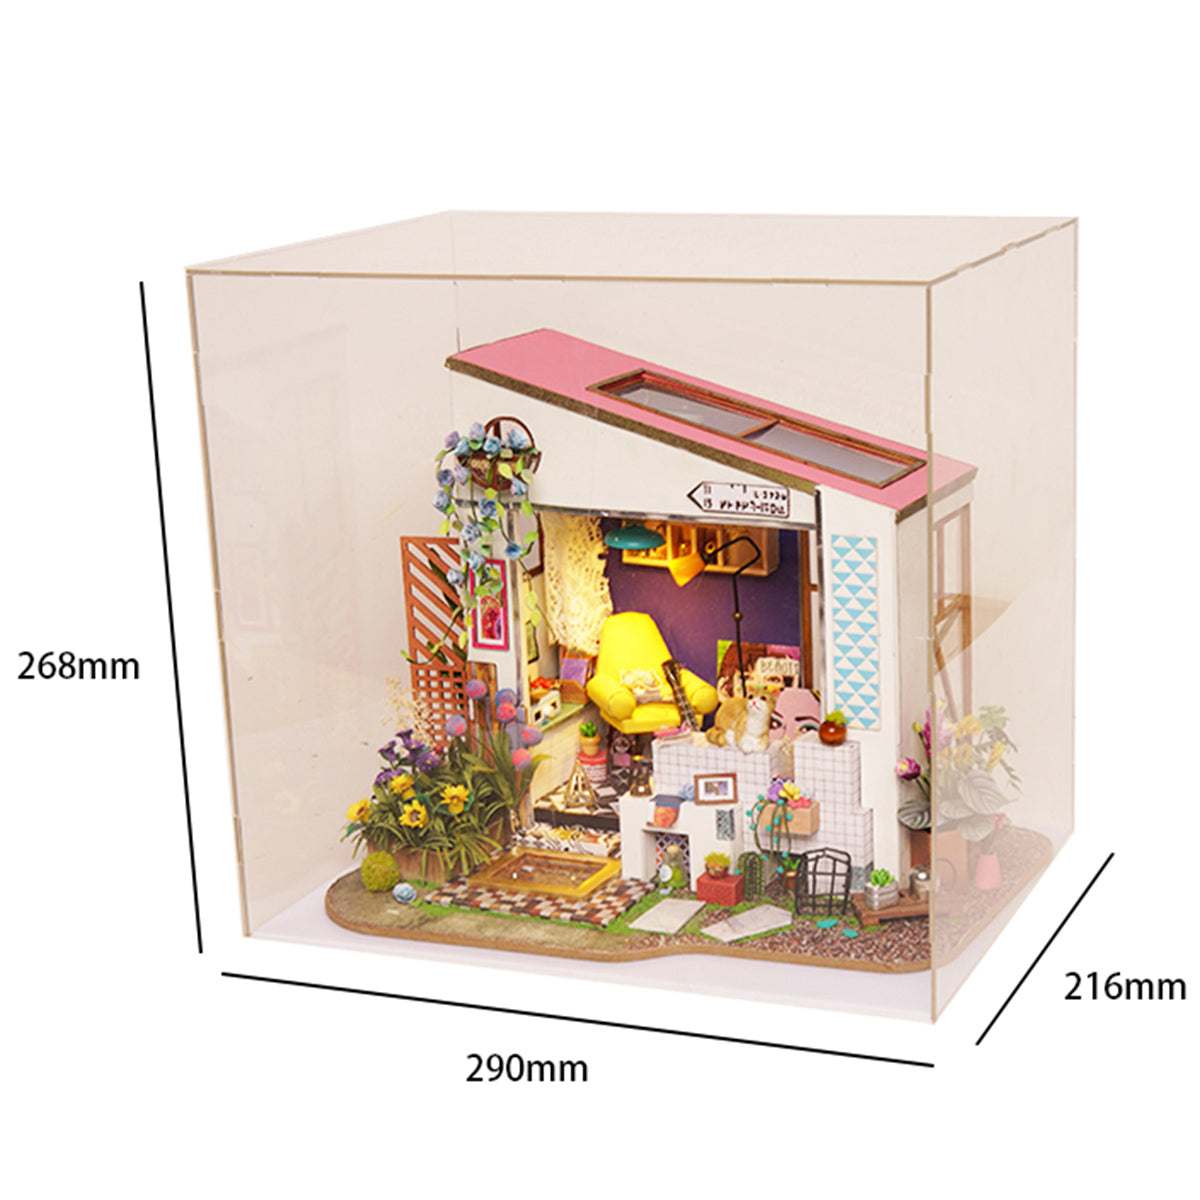 Miniature House - Lily's Porch